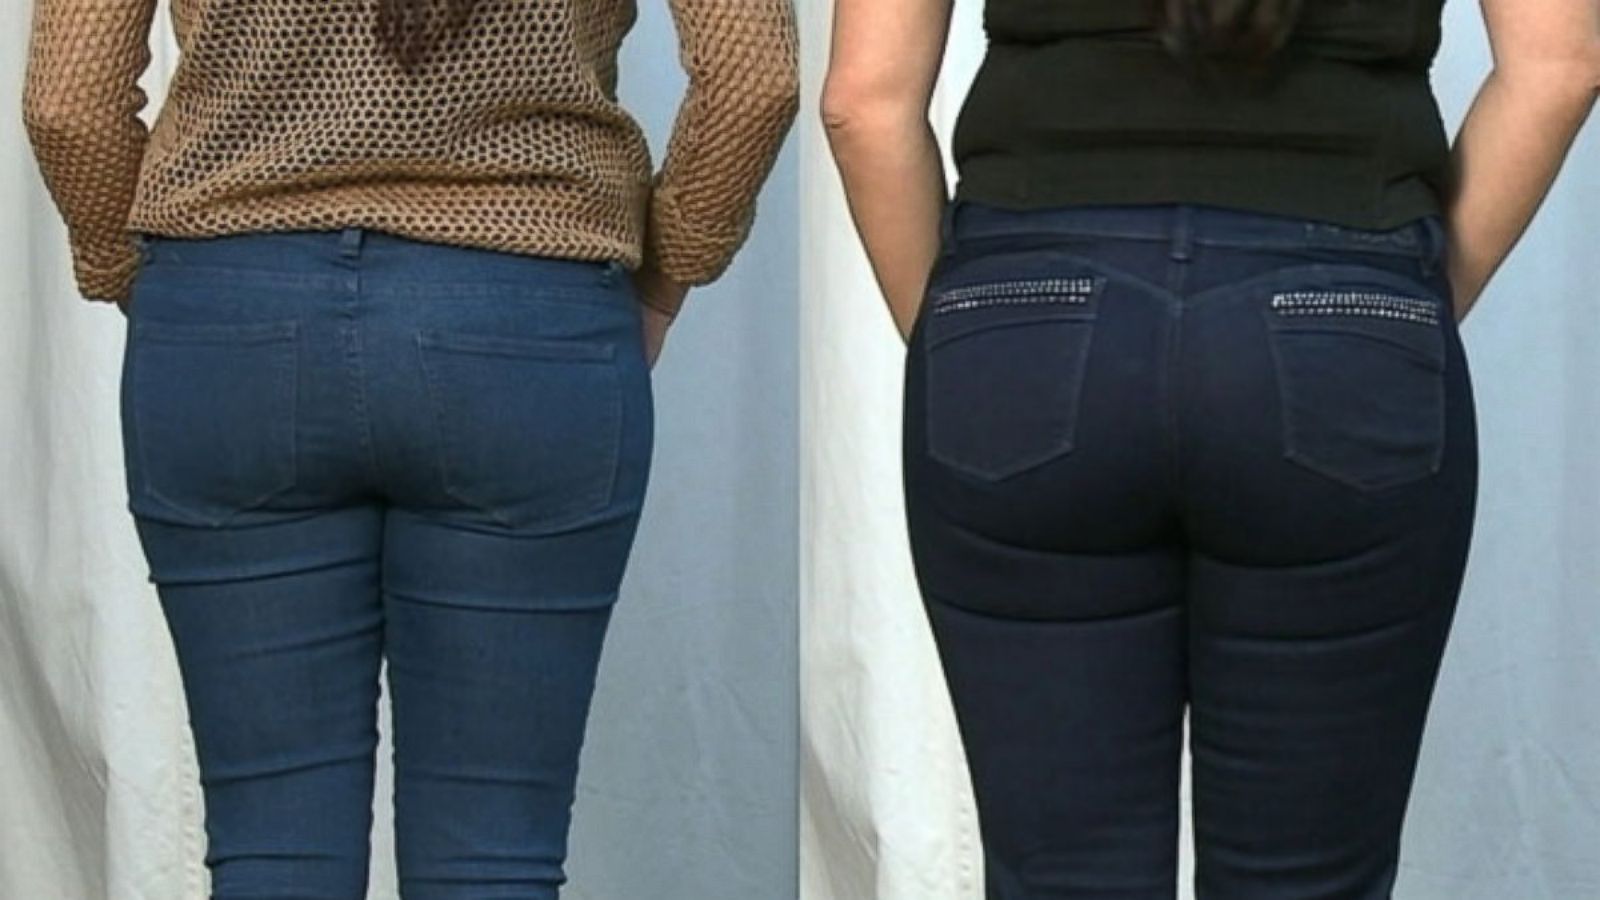 Cheeky 'Push-up Jeans' Offer Women a Fuller Backside - ABC News